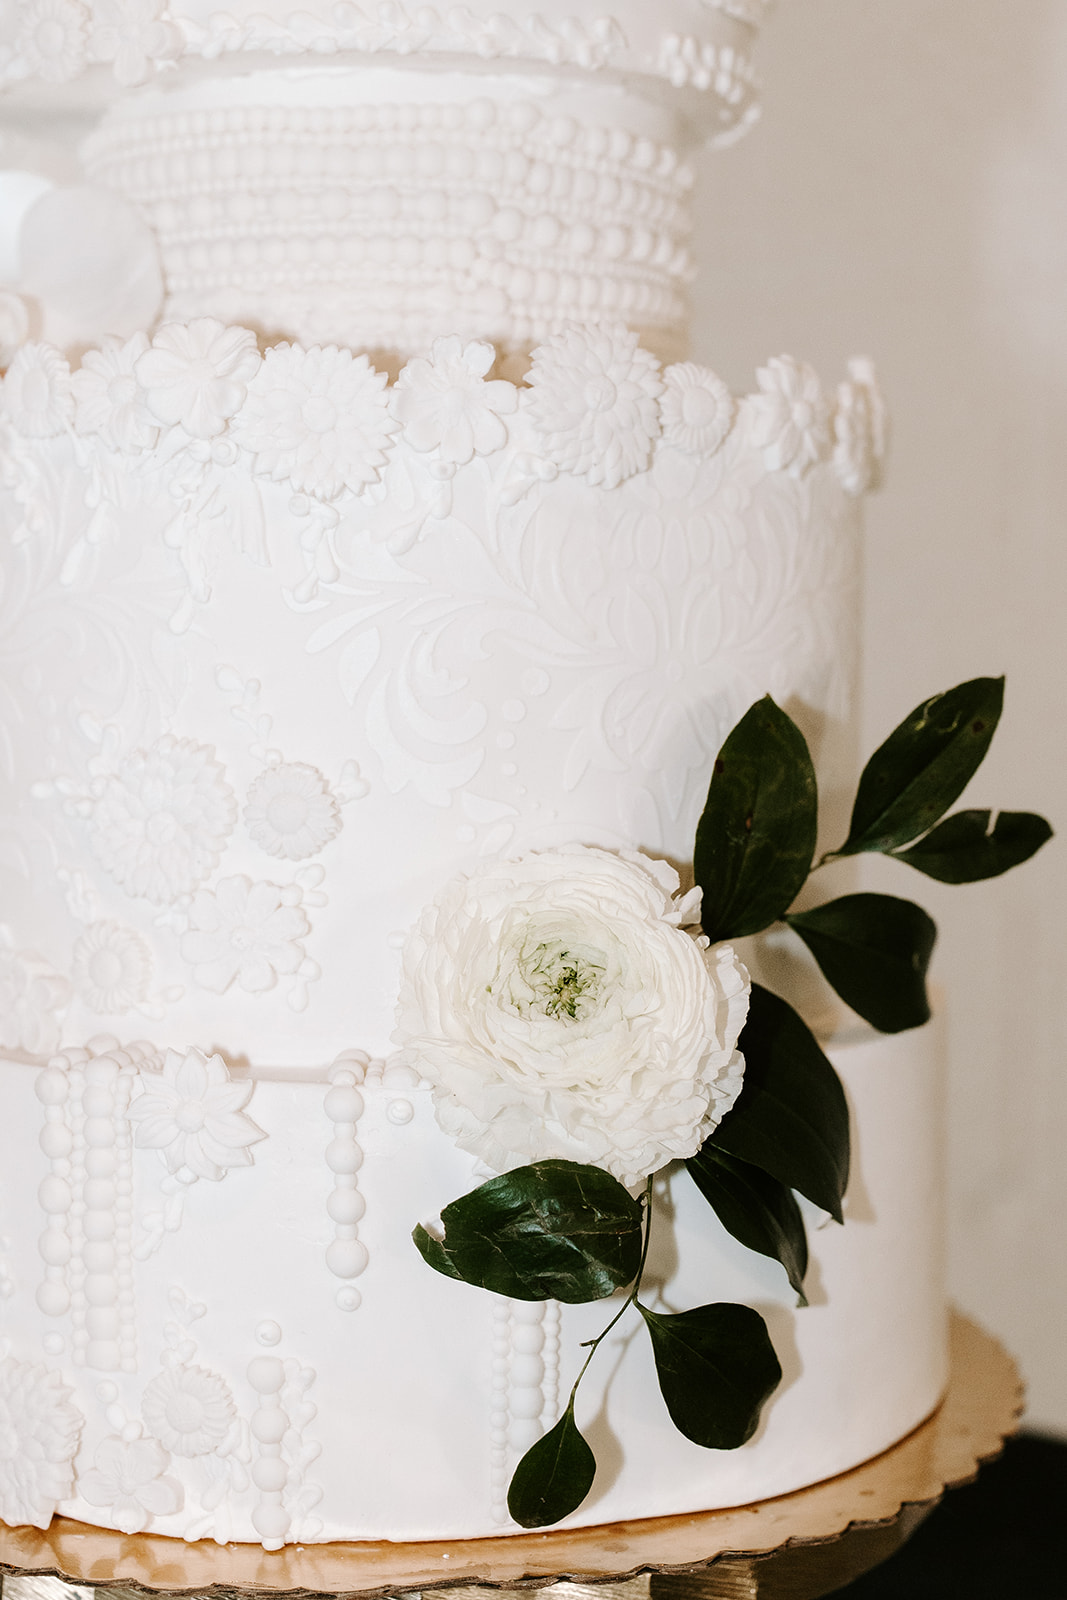 stunning detail shot of the beautiful white 3 tier wedding cake